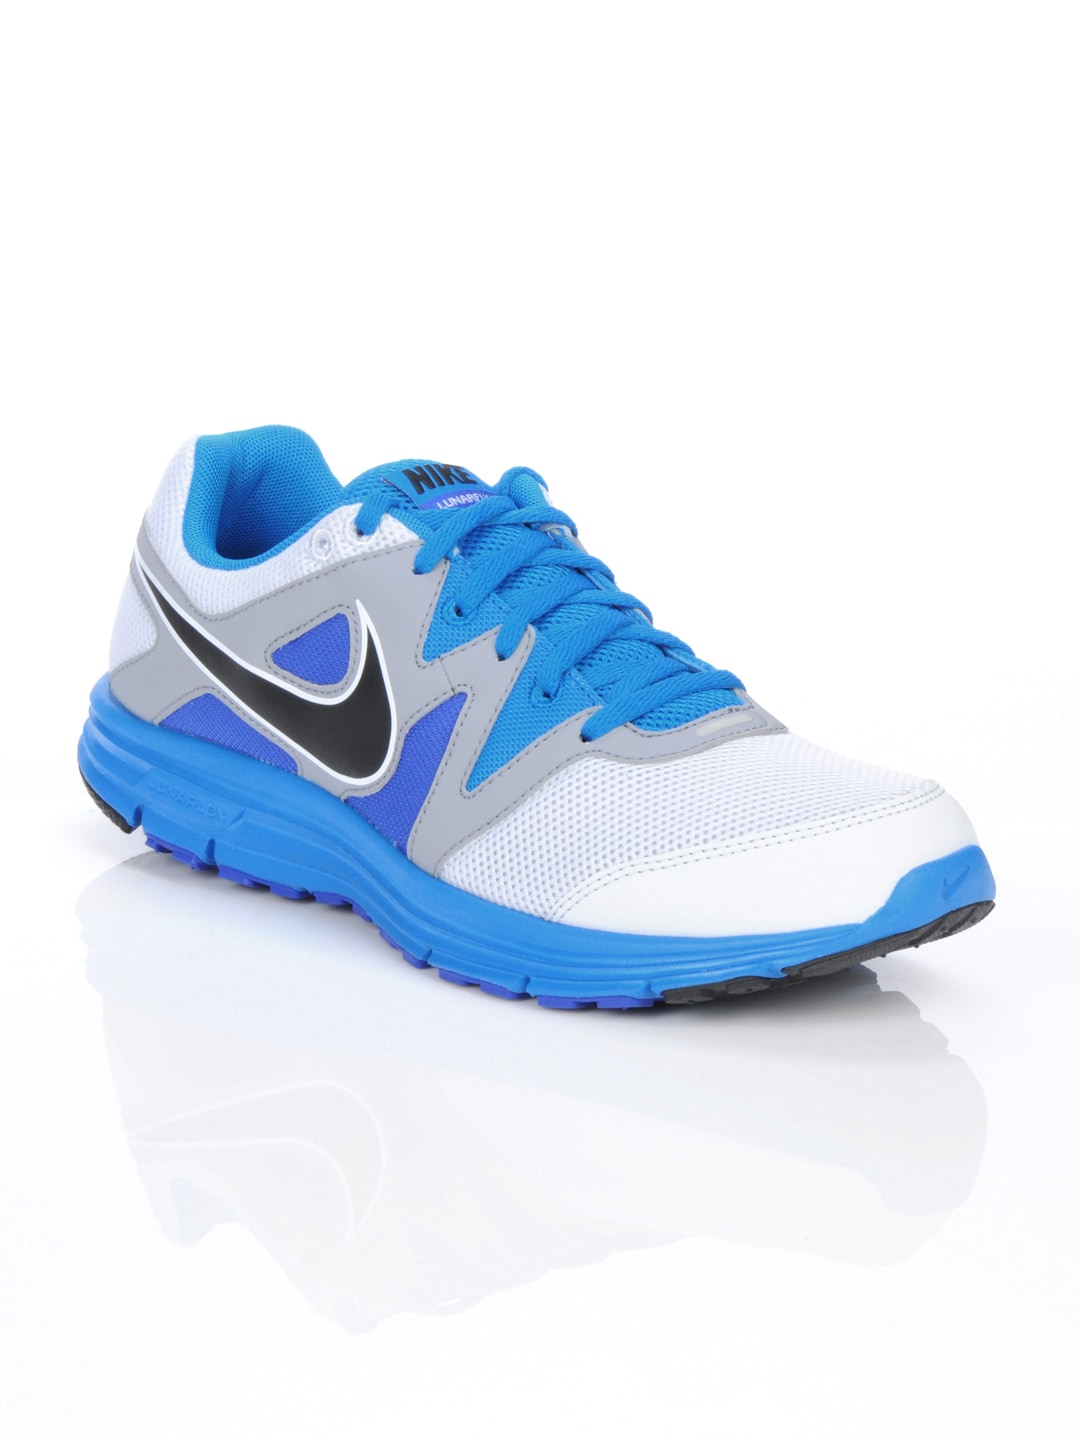 Nike Men Lunarfly +3 White Sports Shoes